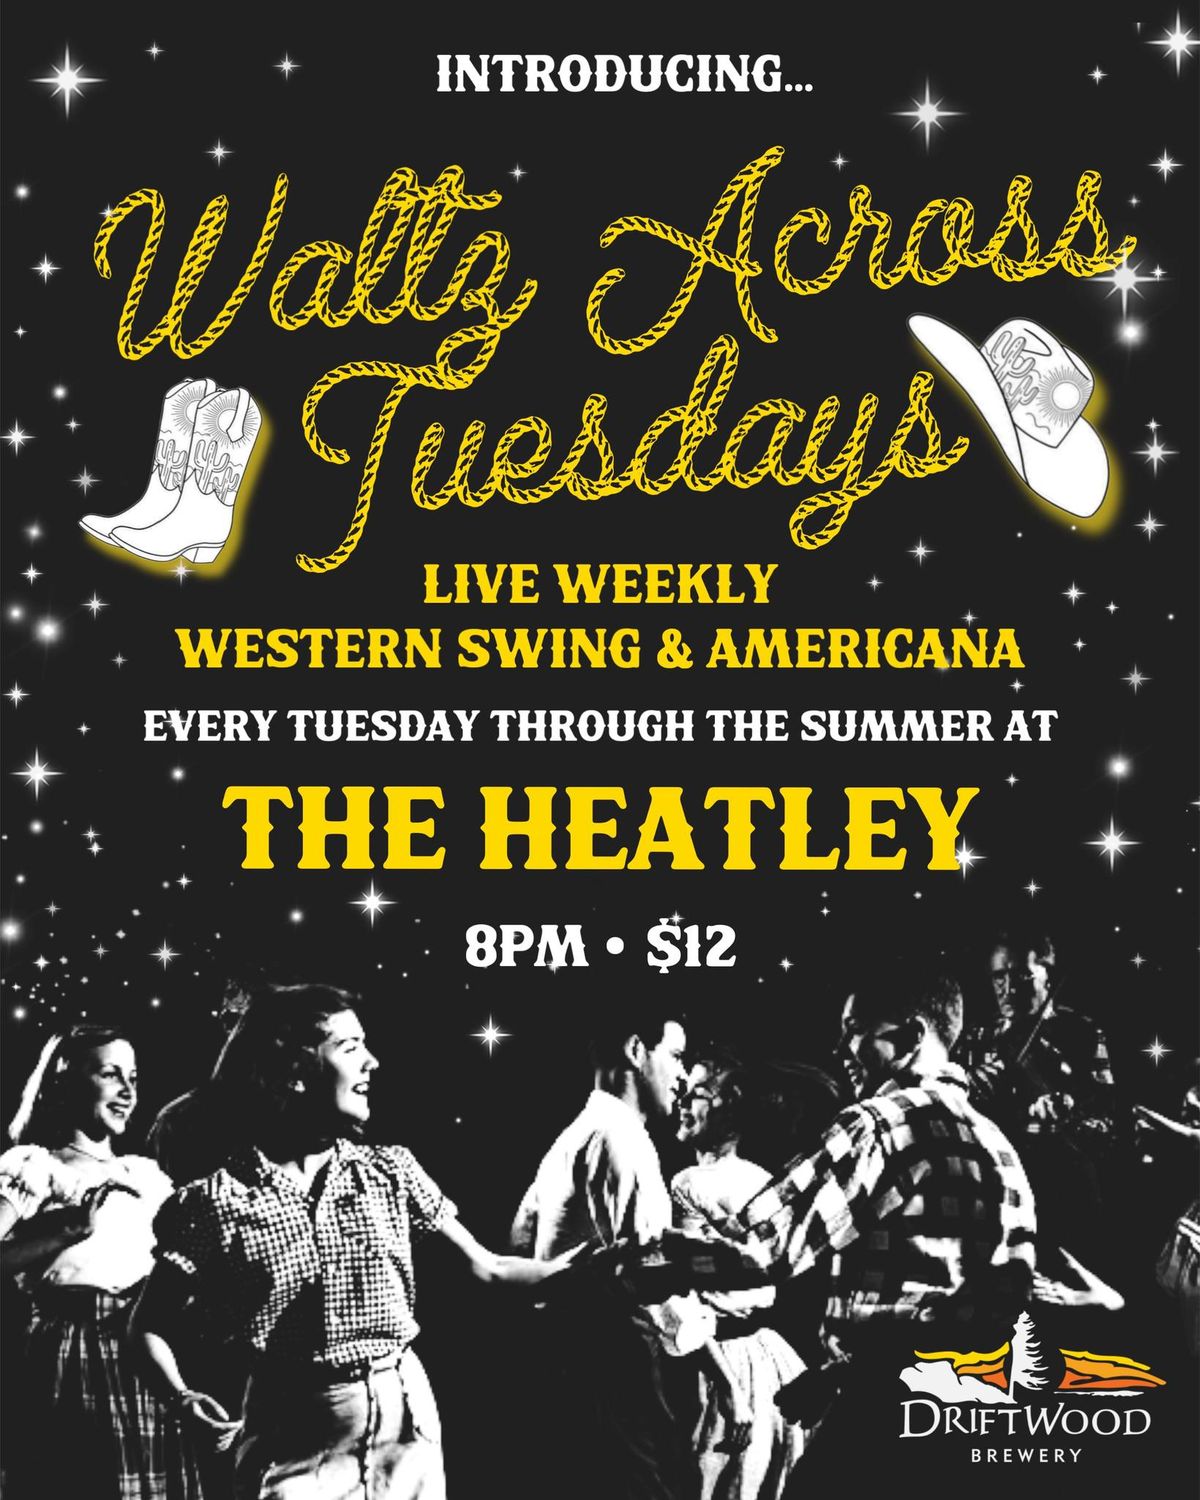 WALTZ ACROSS TUESDAYS - Live Western Swing & Americana at THE HEATLEY